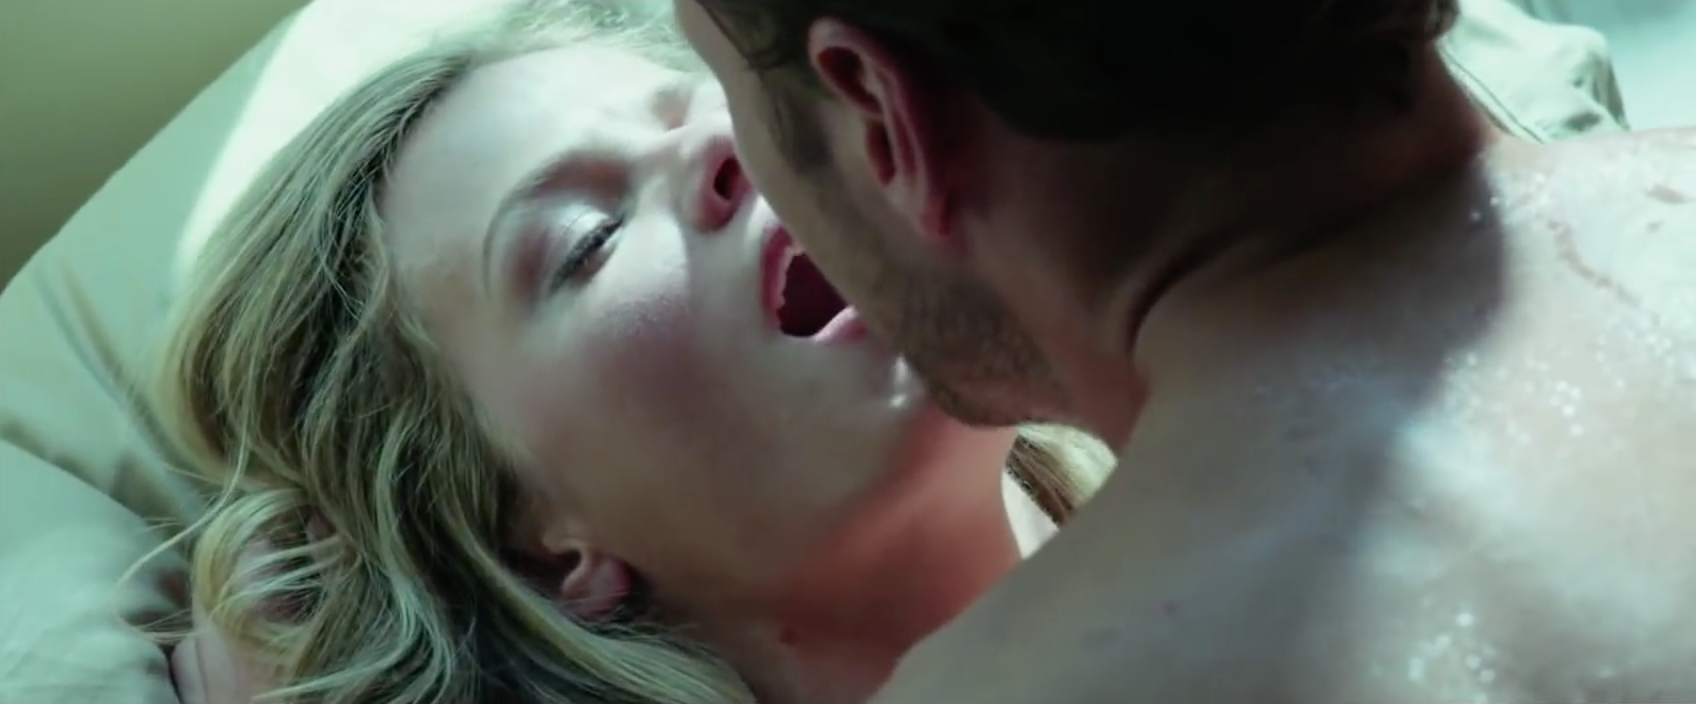 Movie Sex Scenes With Video 79